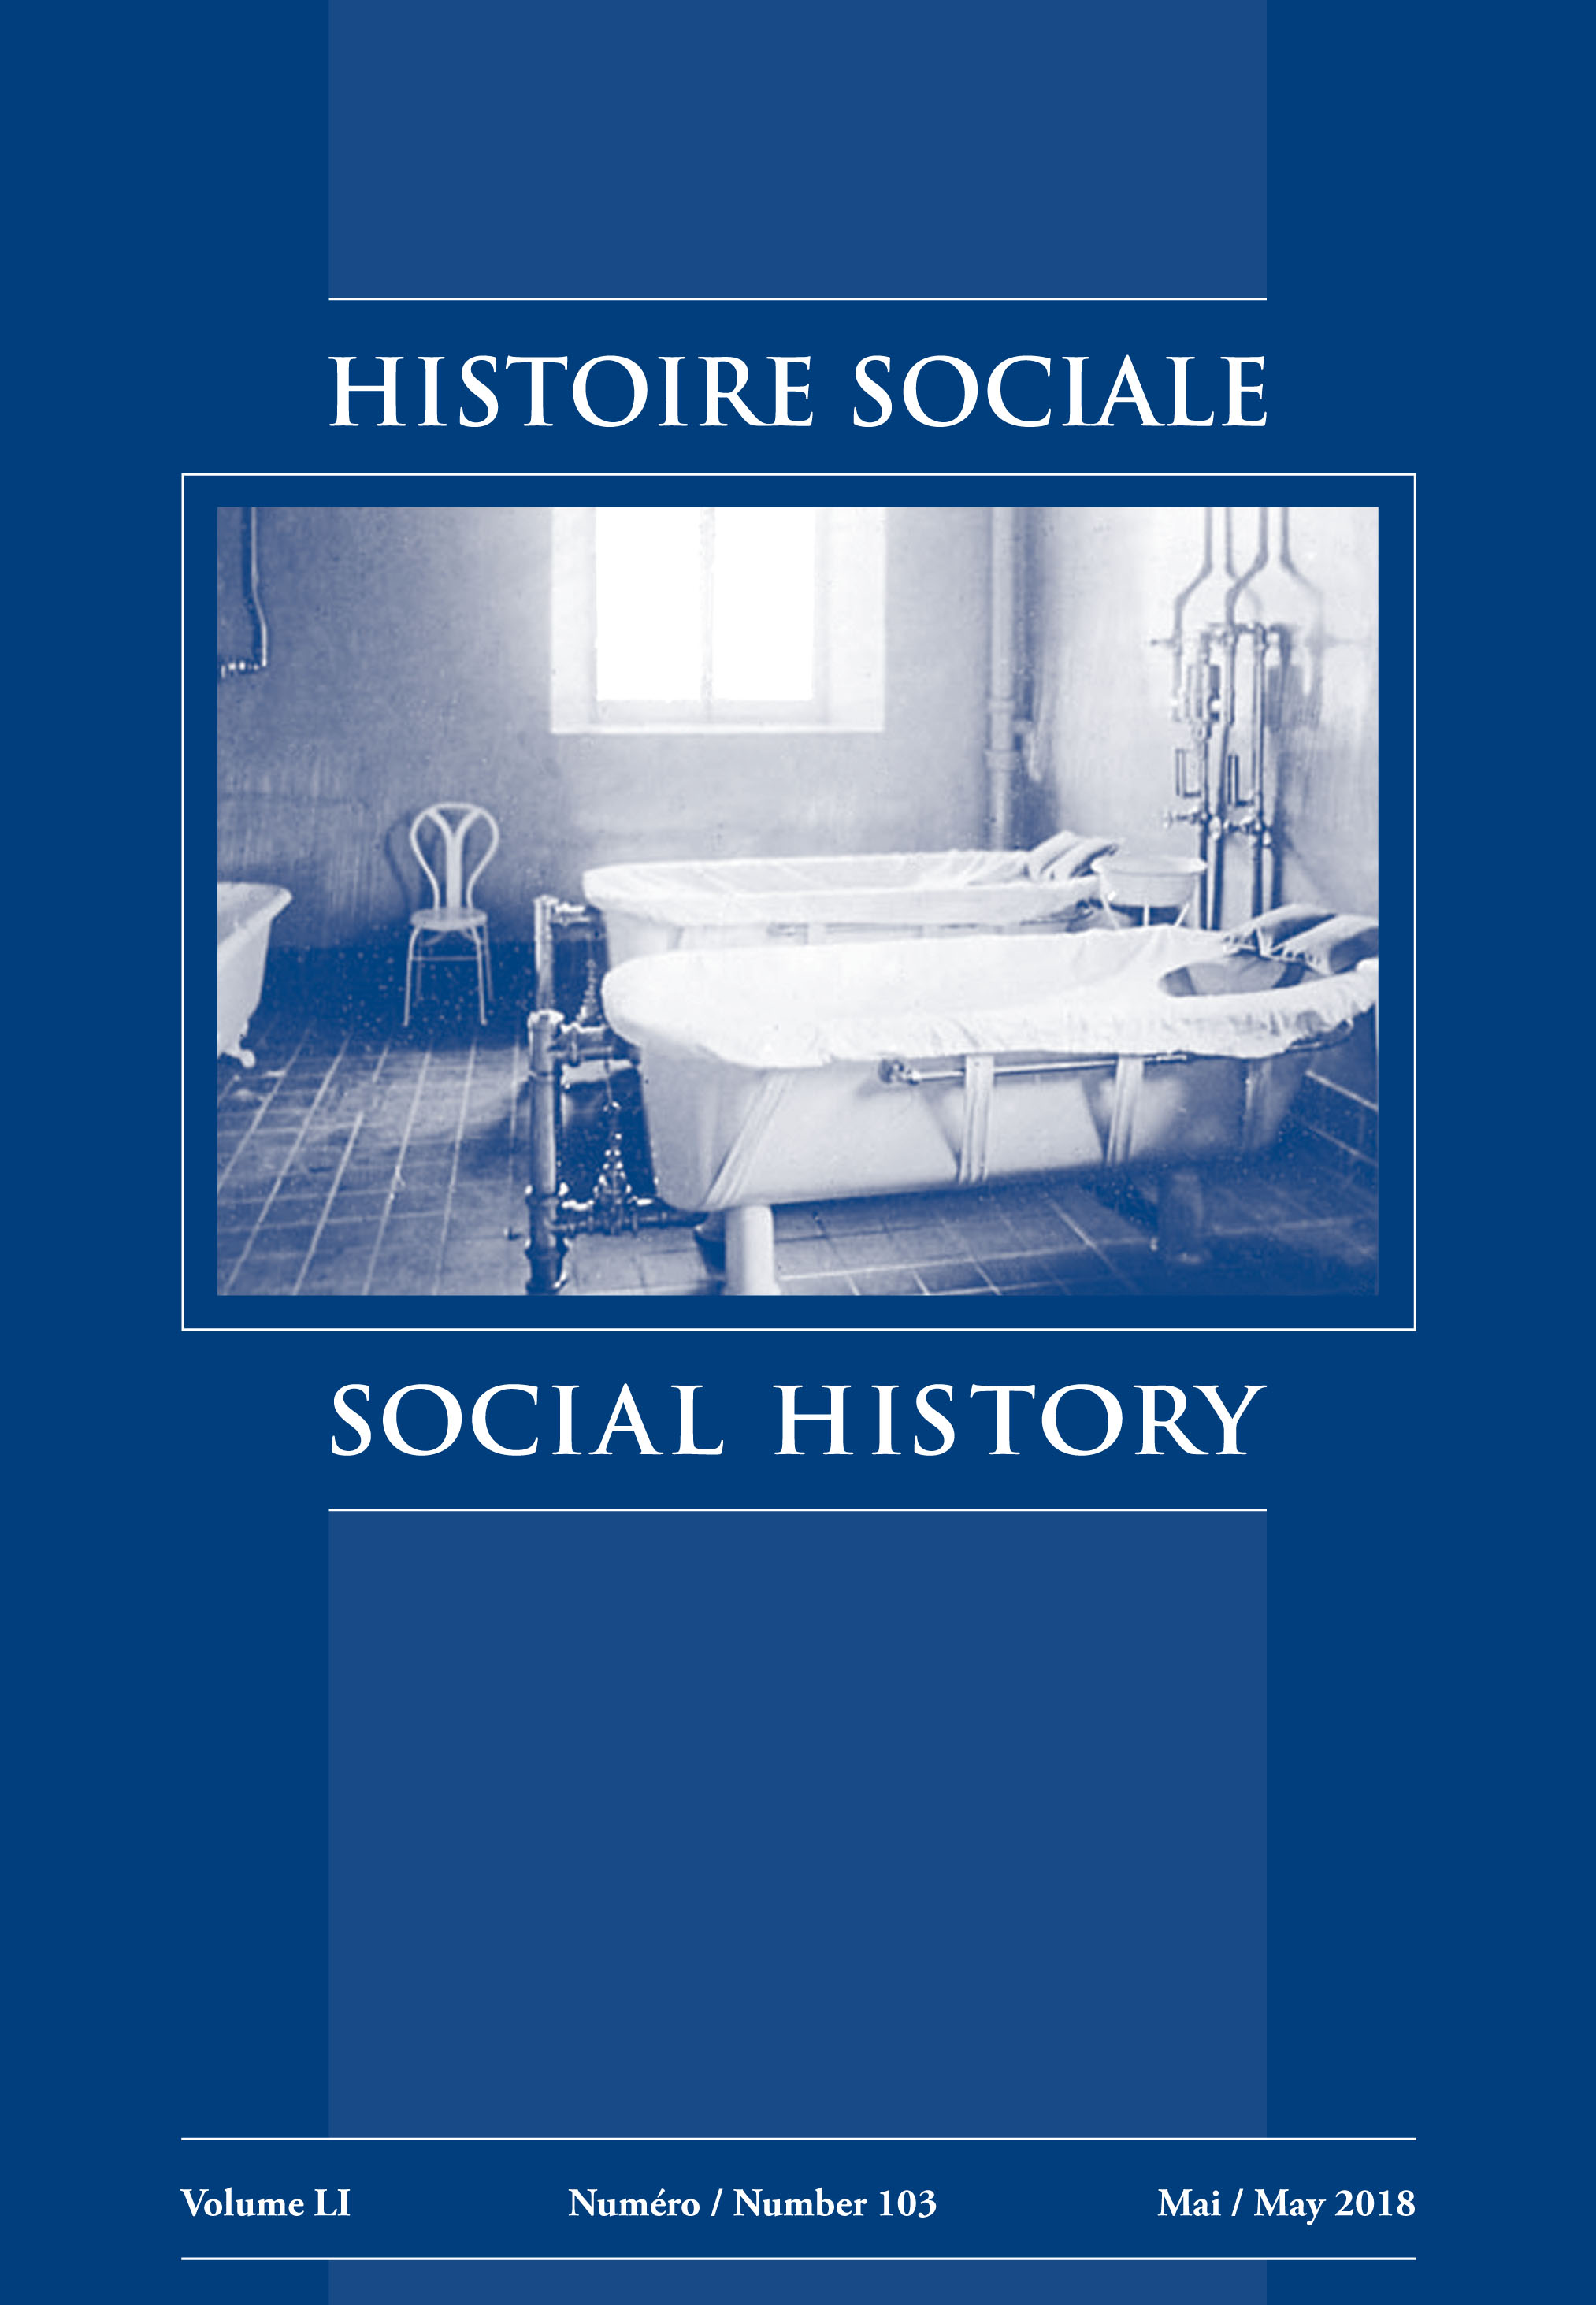 HISTOIRE SOCIALE / SOCIAL HISTORY Volume LI No 103 (May 2018))